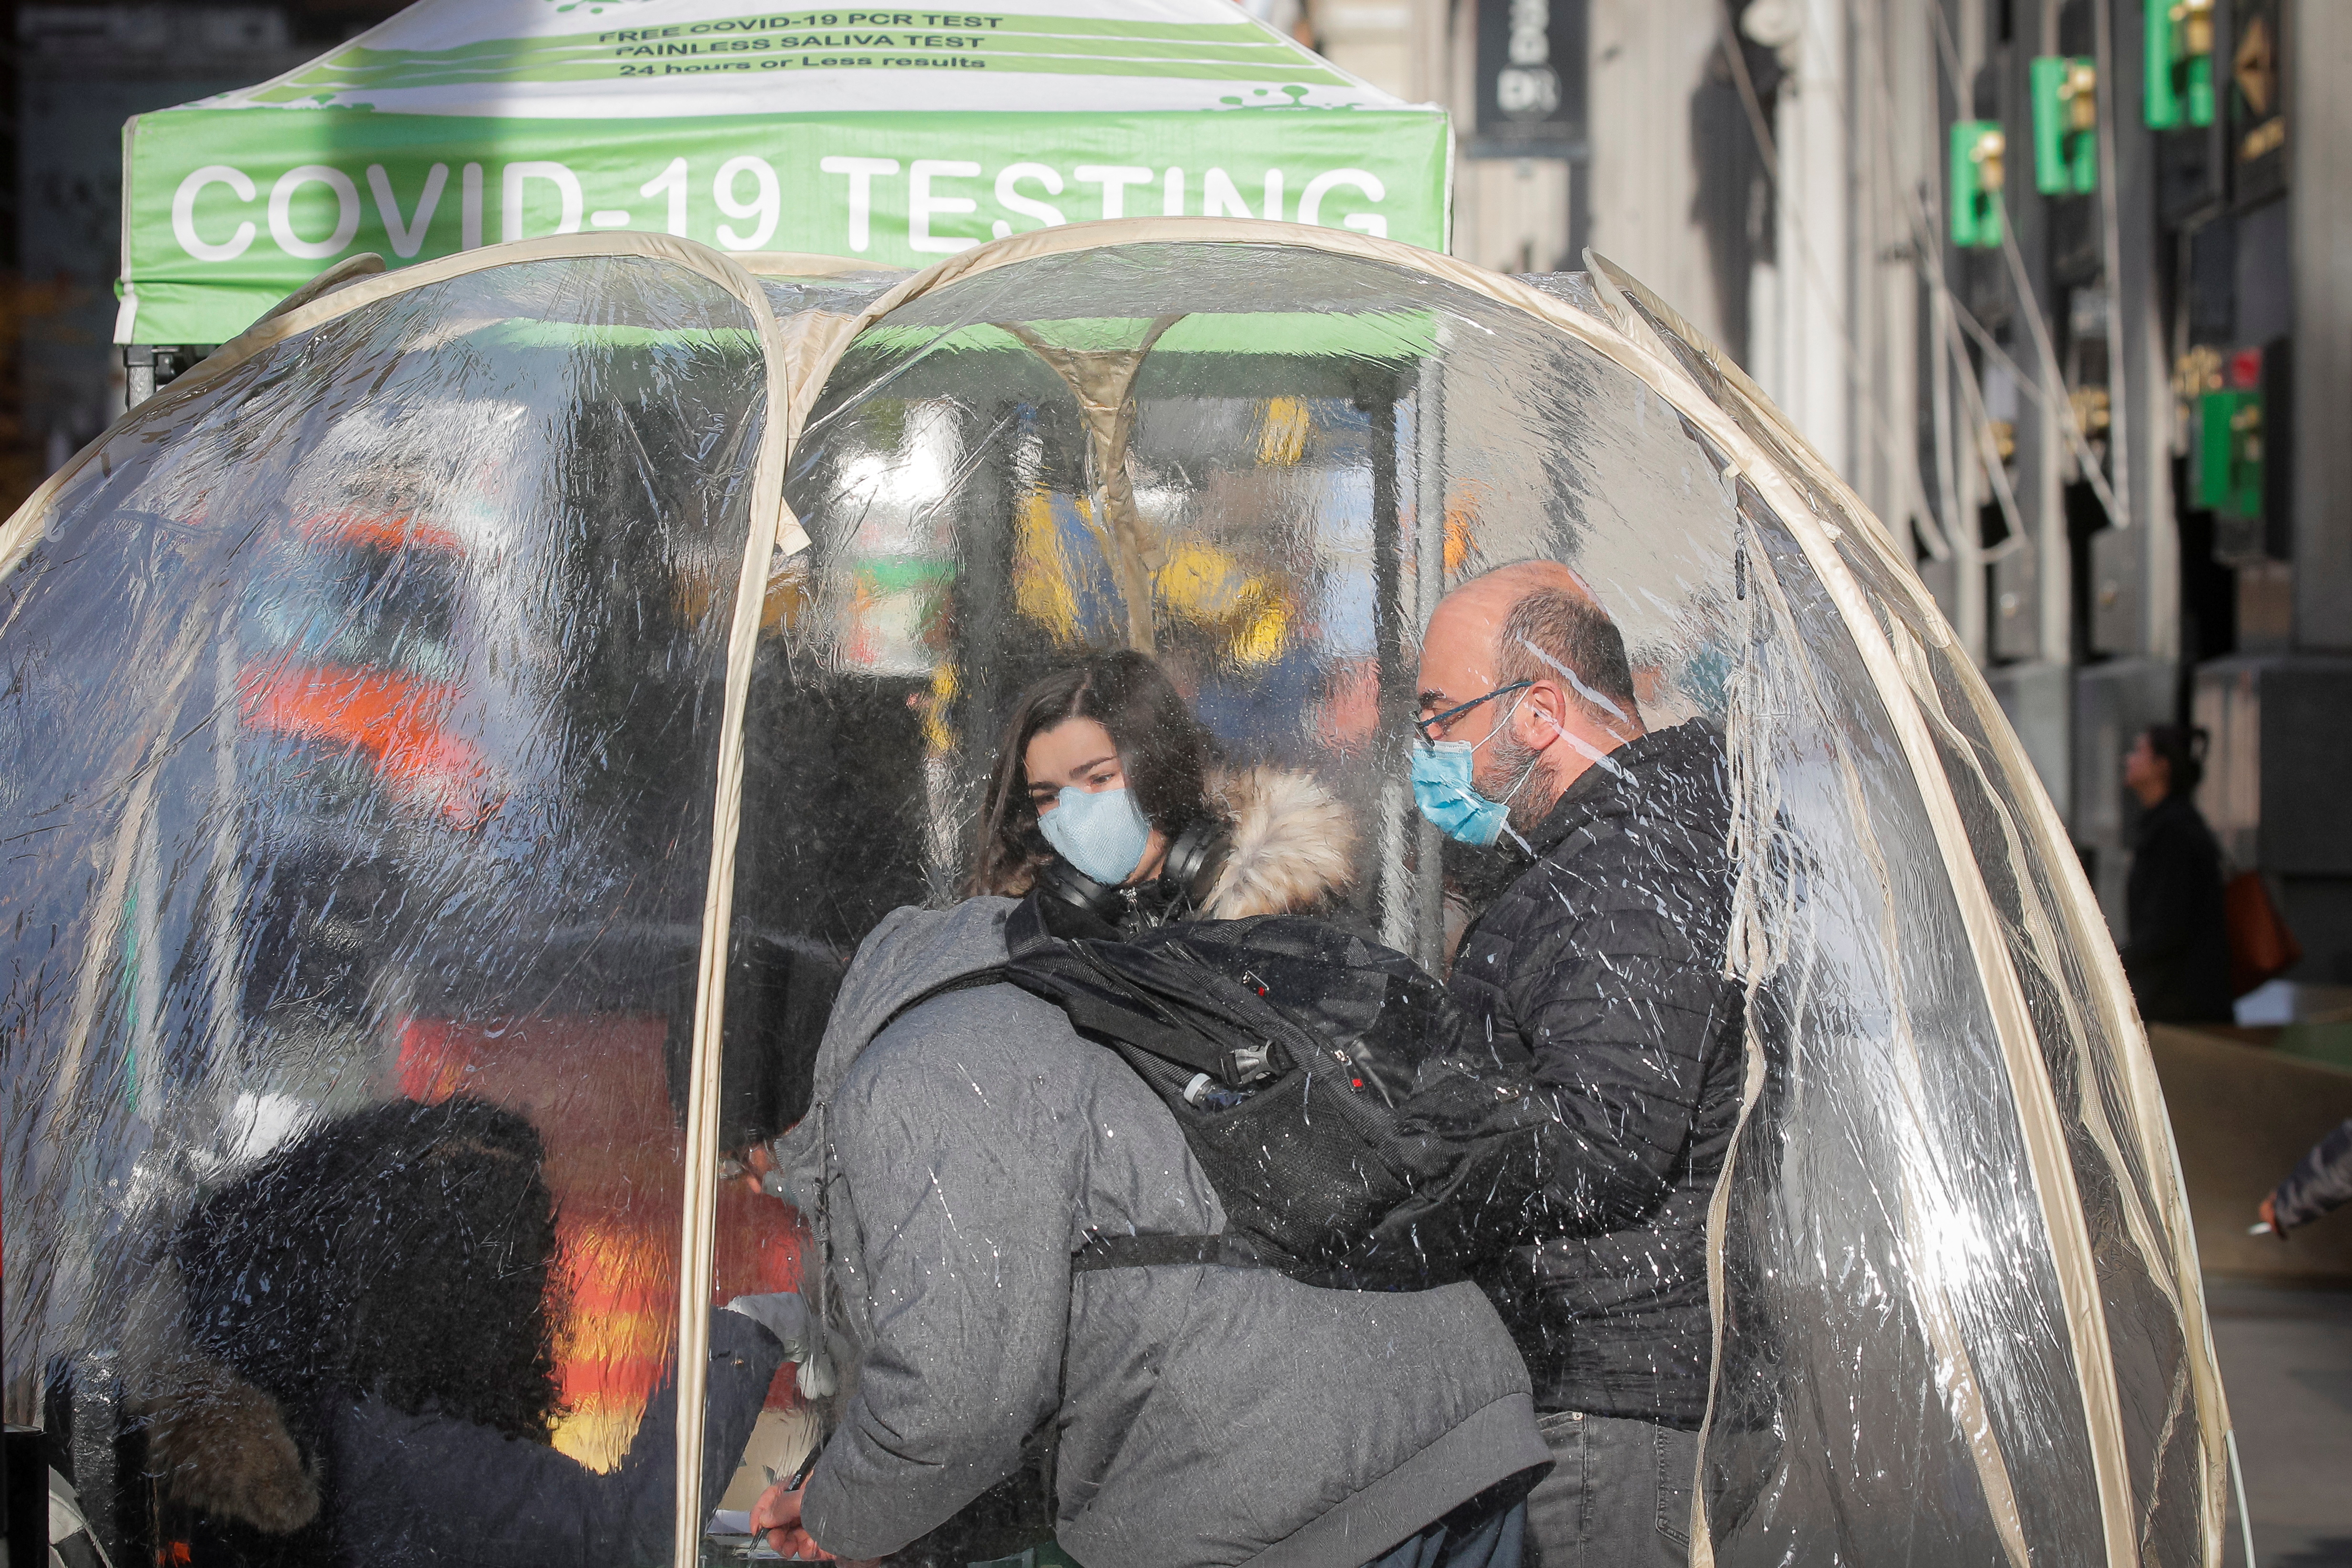 People take coronavirus disease (COVID-19) tests at a pop-up sidewalk testing site in New York